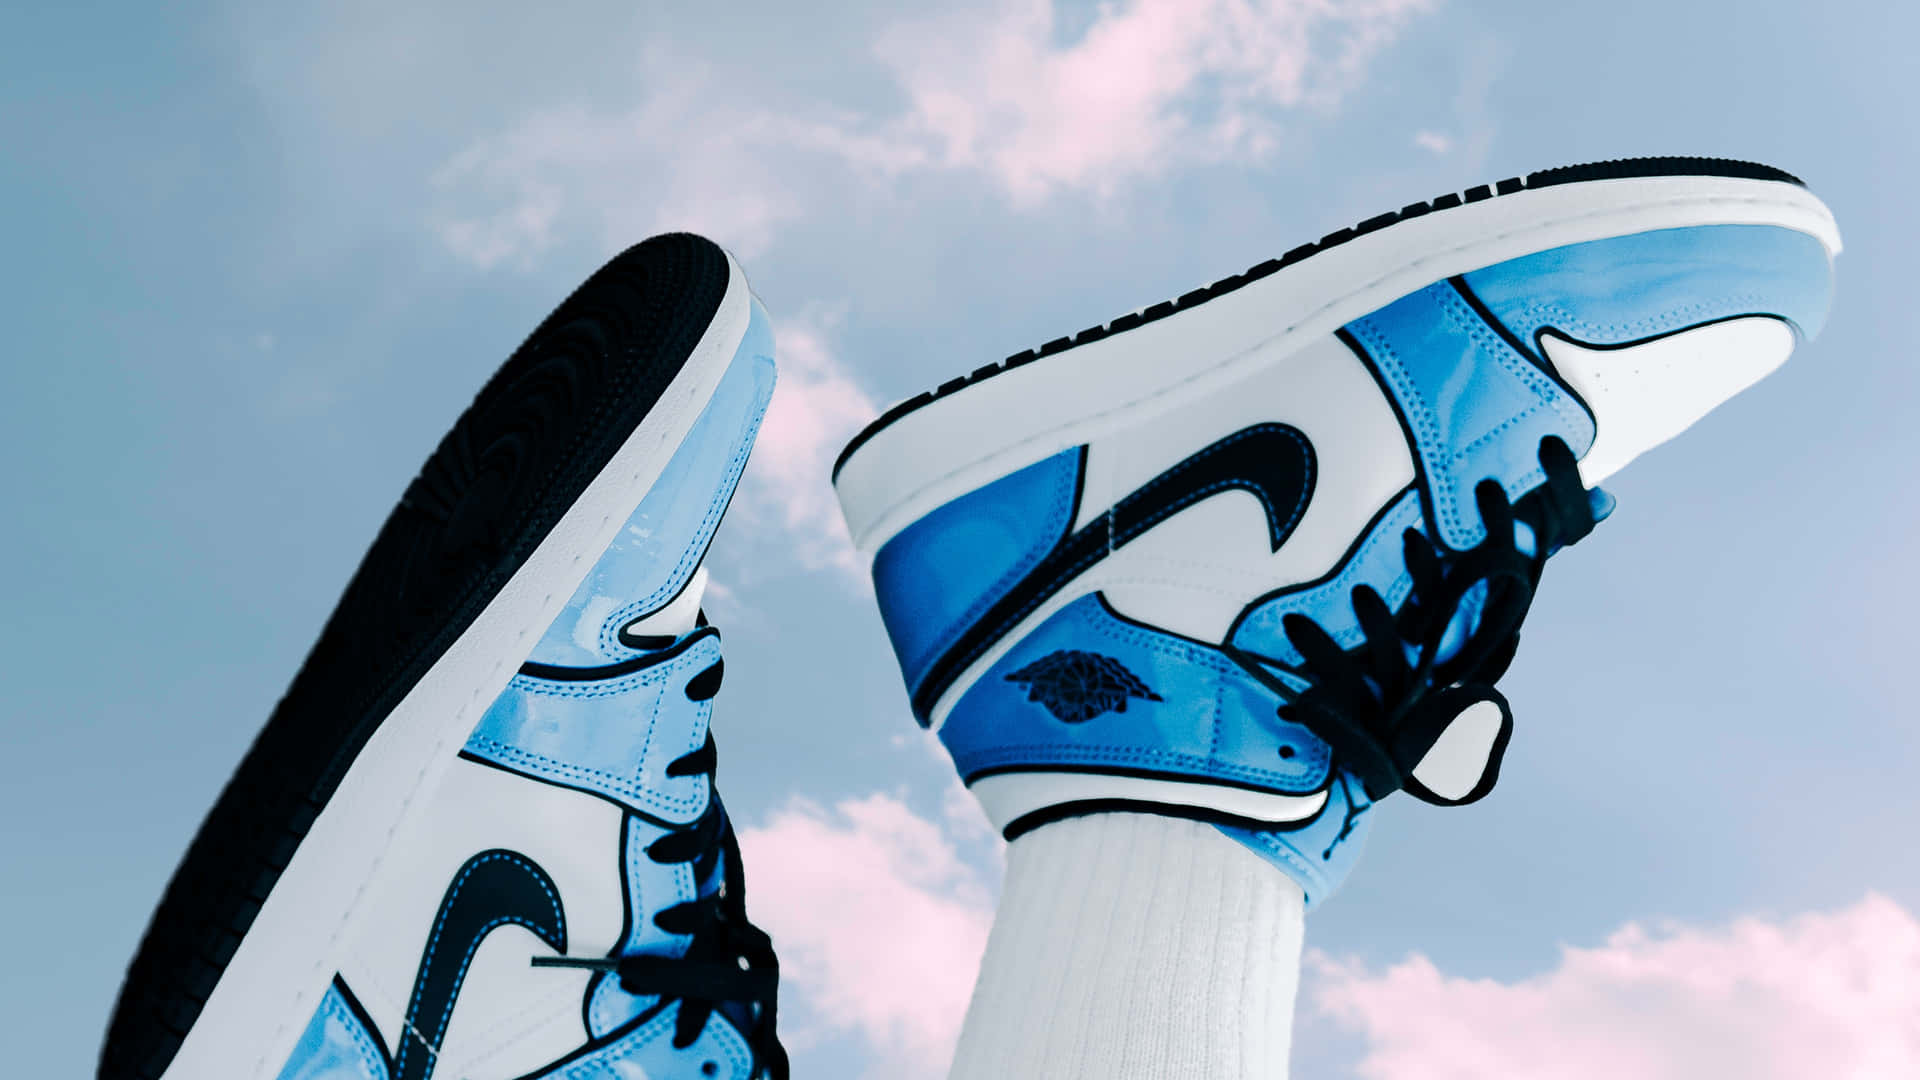 Et par blå og hvide sneakers med skyer i himlen Wallpaper